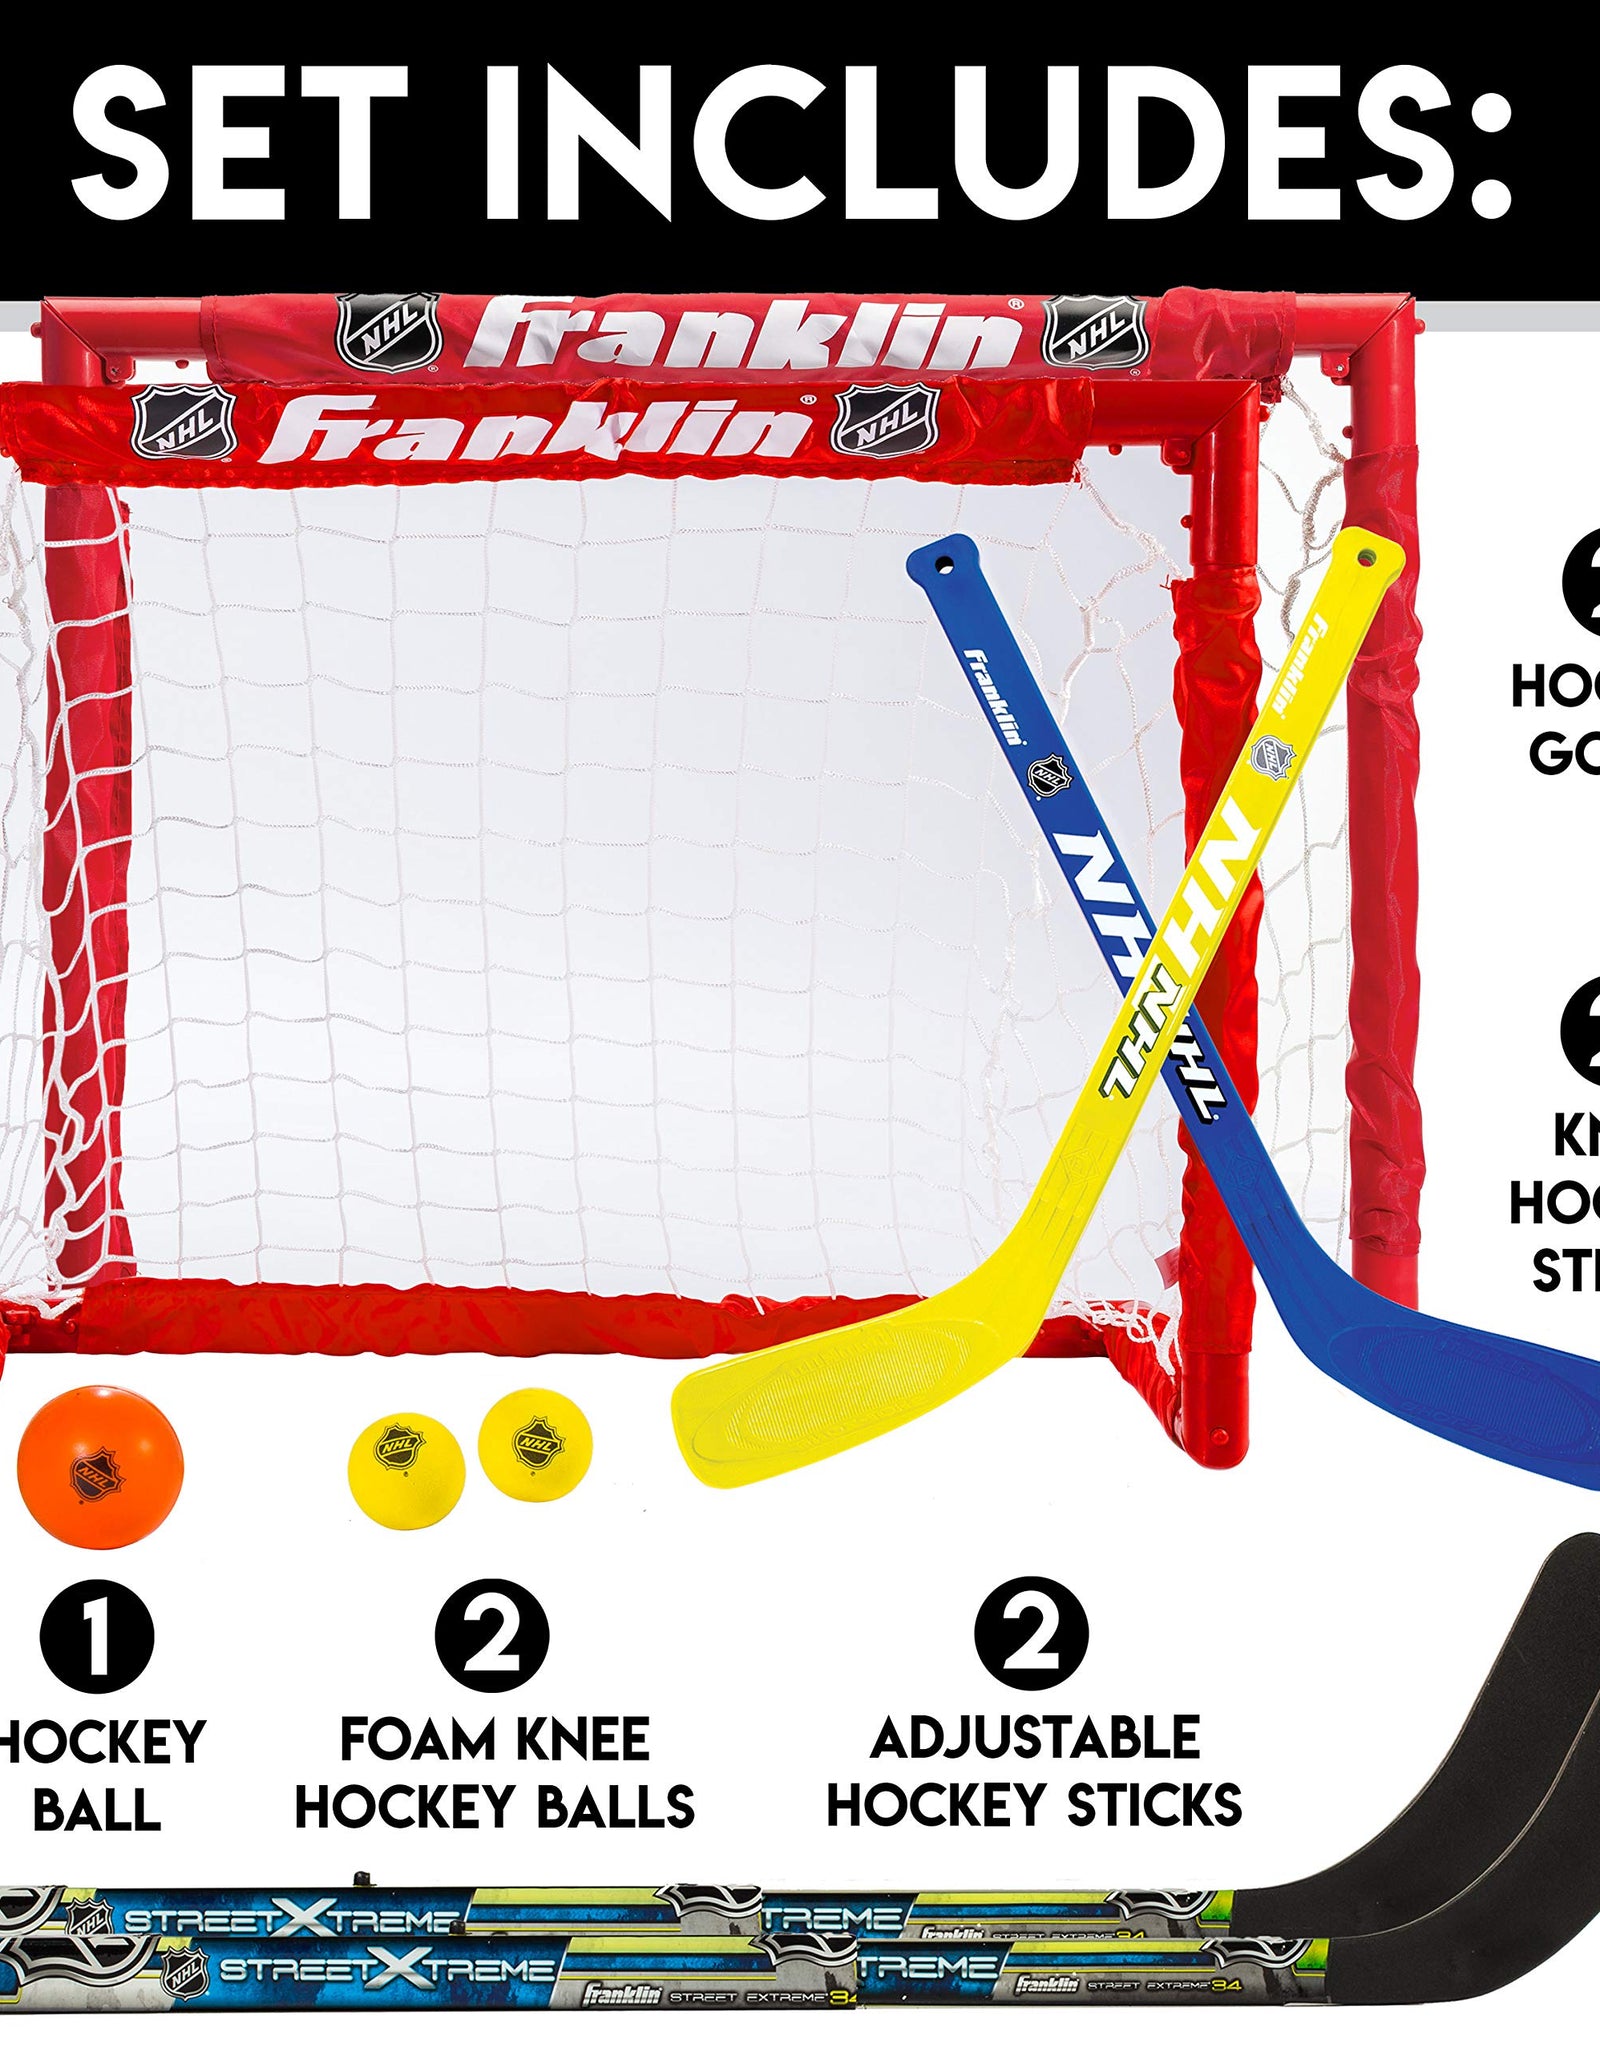 Franklin Sports Kids Folding Hockey 2 Goal Set - NHL - Street Hockey & Knee Hockey - Includes 2 Adjustable Hockey Sticks, 2 Knee Hockey Sticks, 2 Hockey Balls - 24 x 19 x 19 Inch Goal